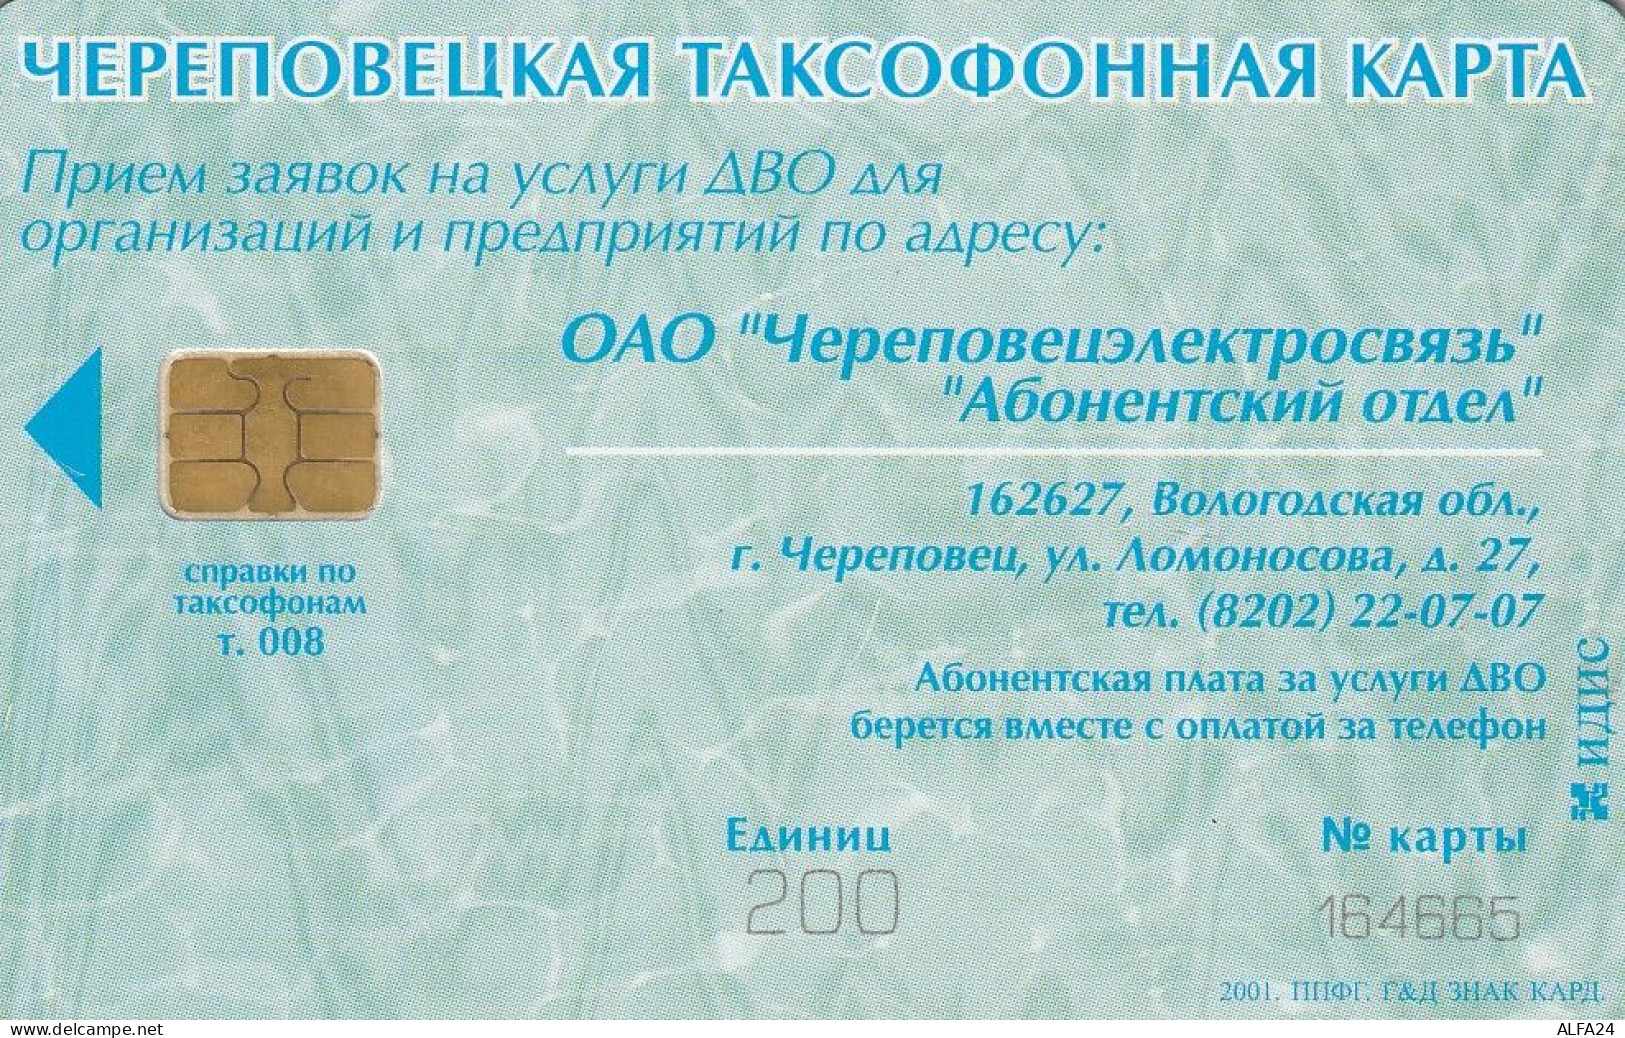 PHONE CARD RUSSIA Cherepovetselektrosvyaz - Cherepovets, Vologda (E9.14.5 - Russie